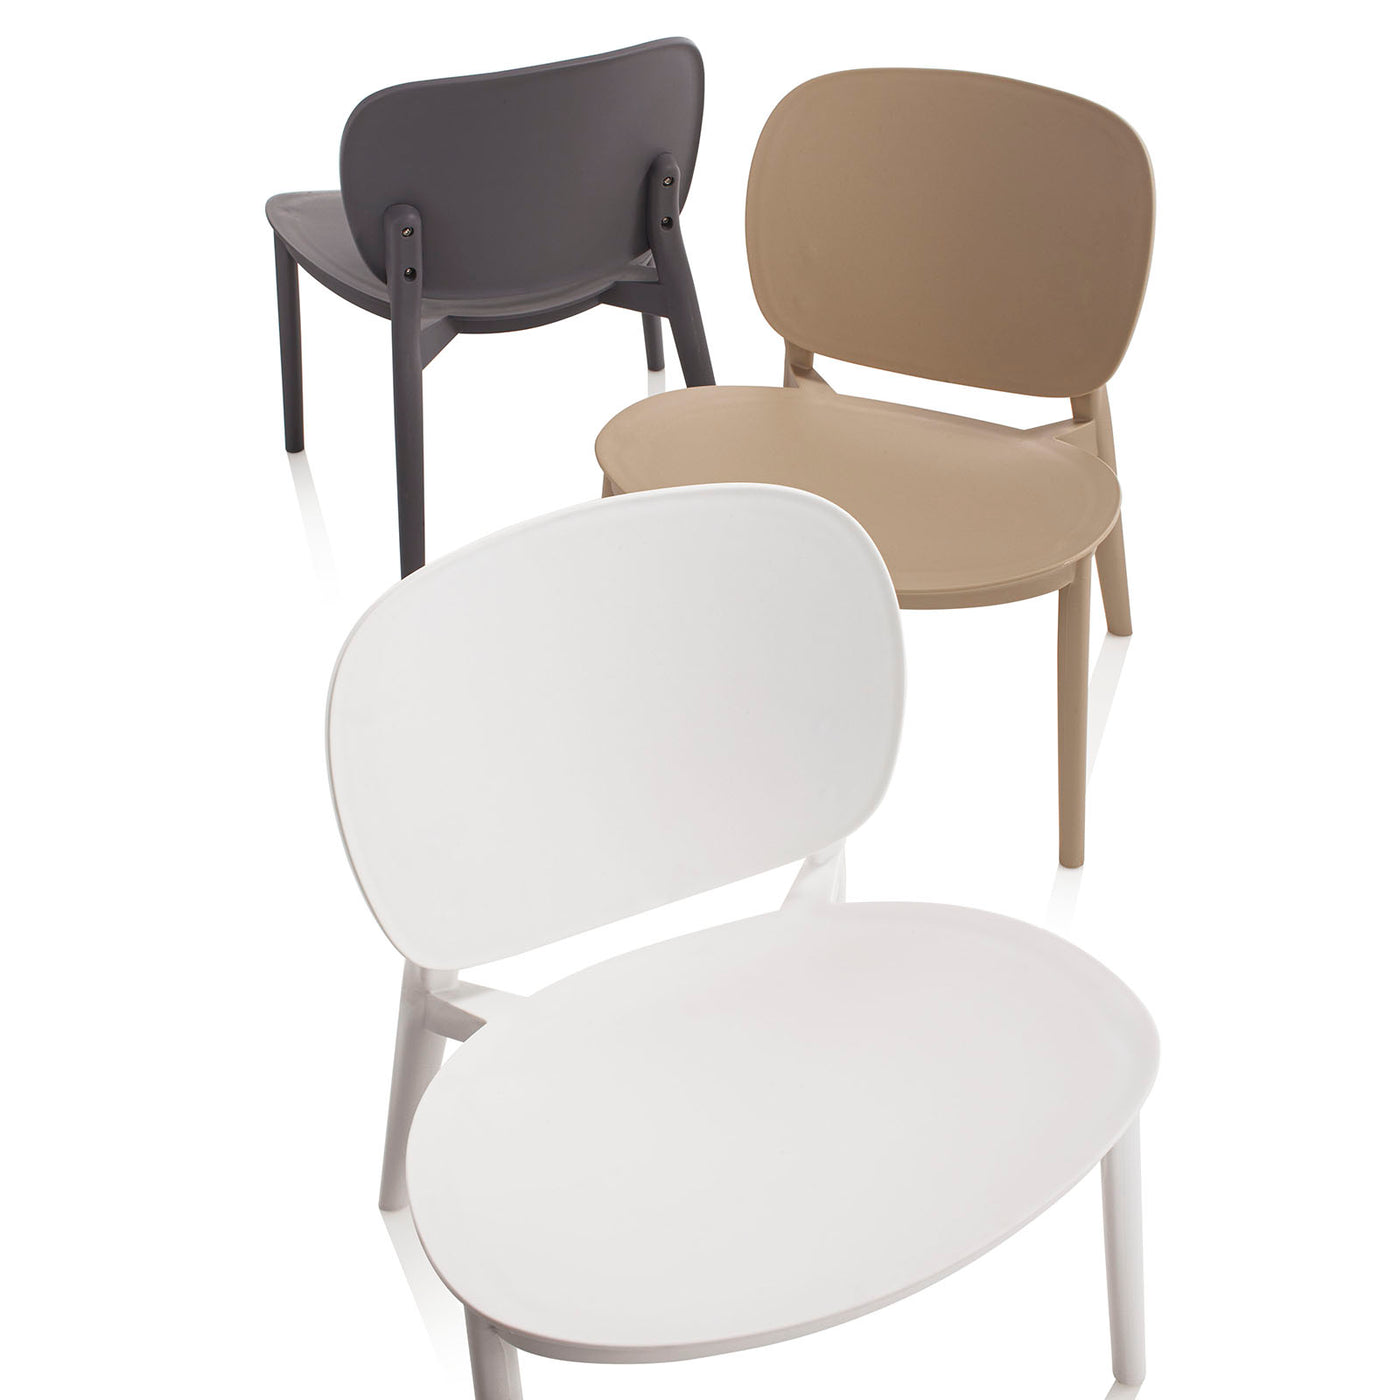 Set of 2 indoor/outdoor chairs MAHON sand